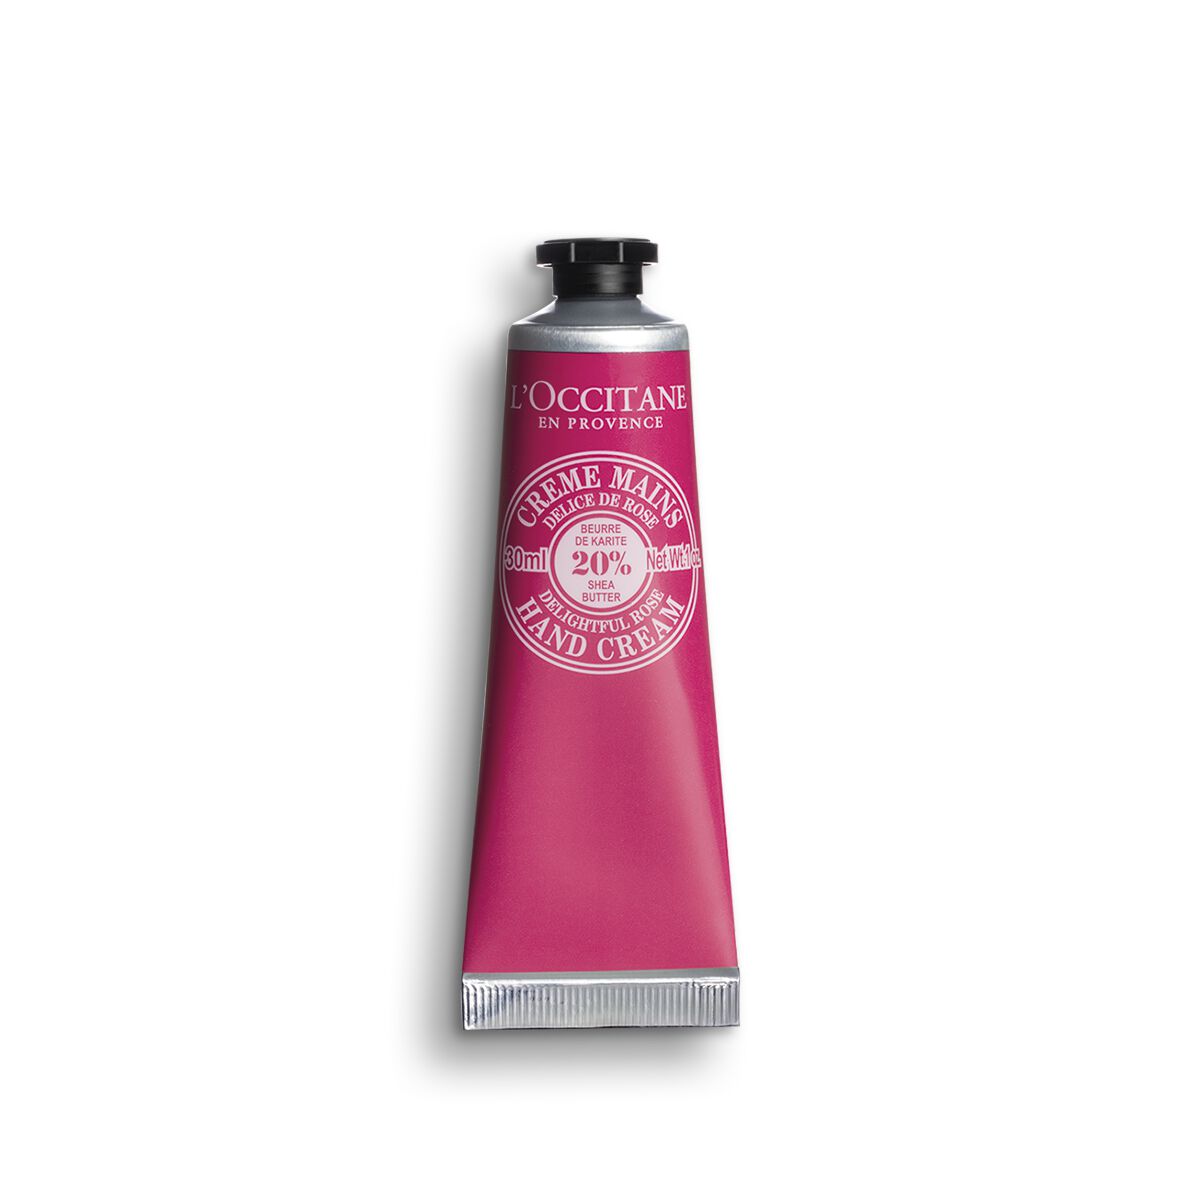 L'occitane Shea Butter Delightful Rose Hand Cream